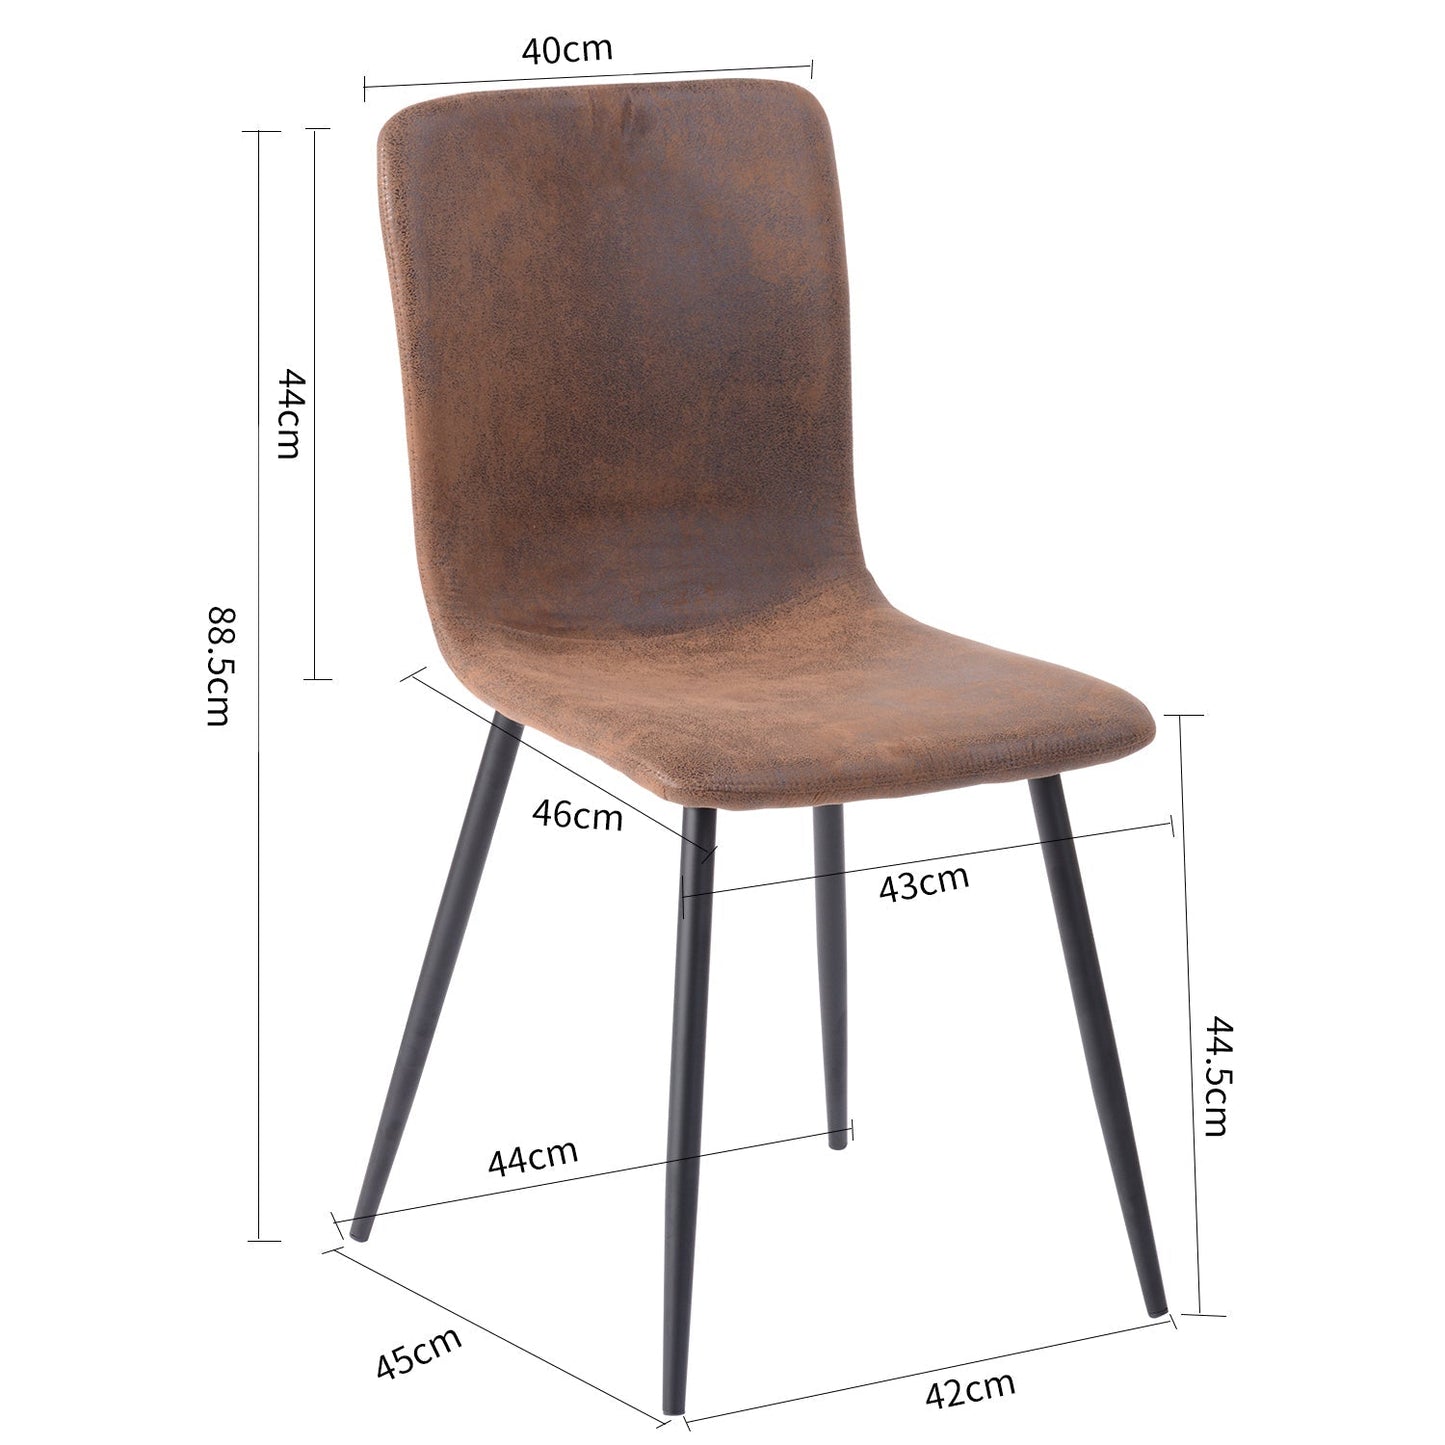 SCARGILL SUEDE dining chair with metal legs - Brown